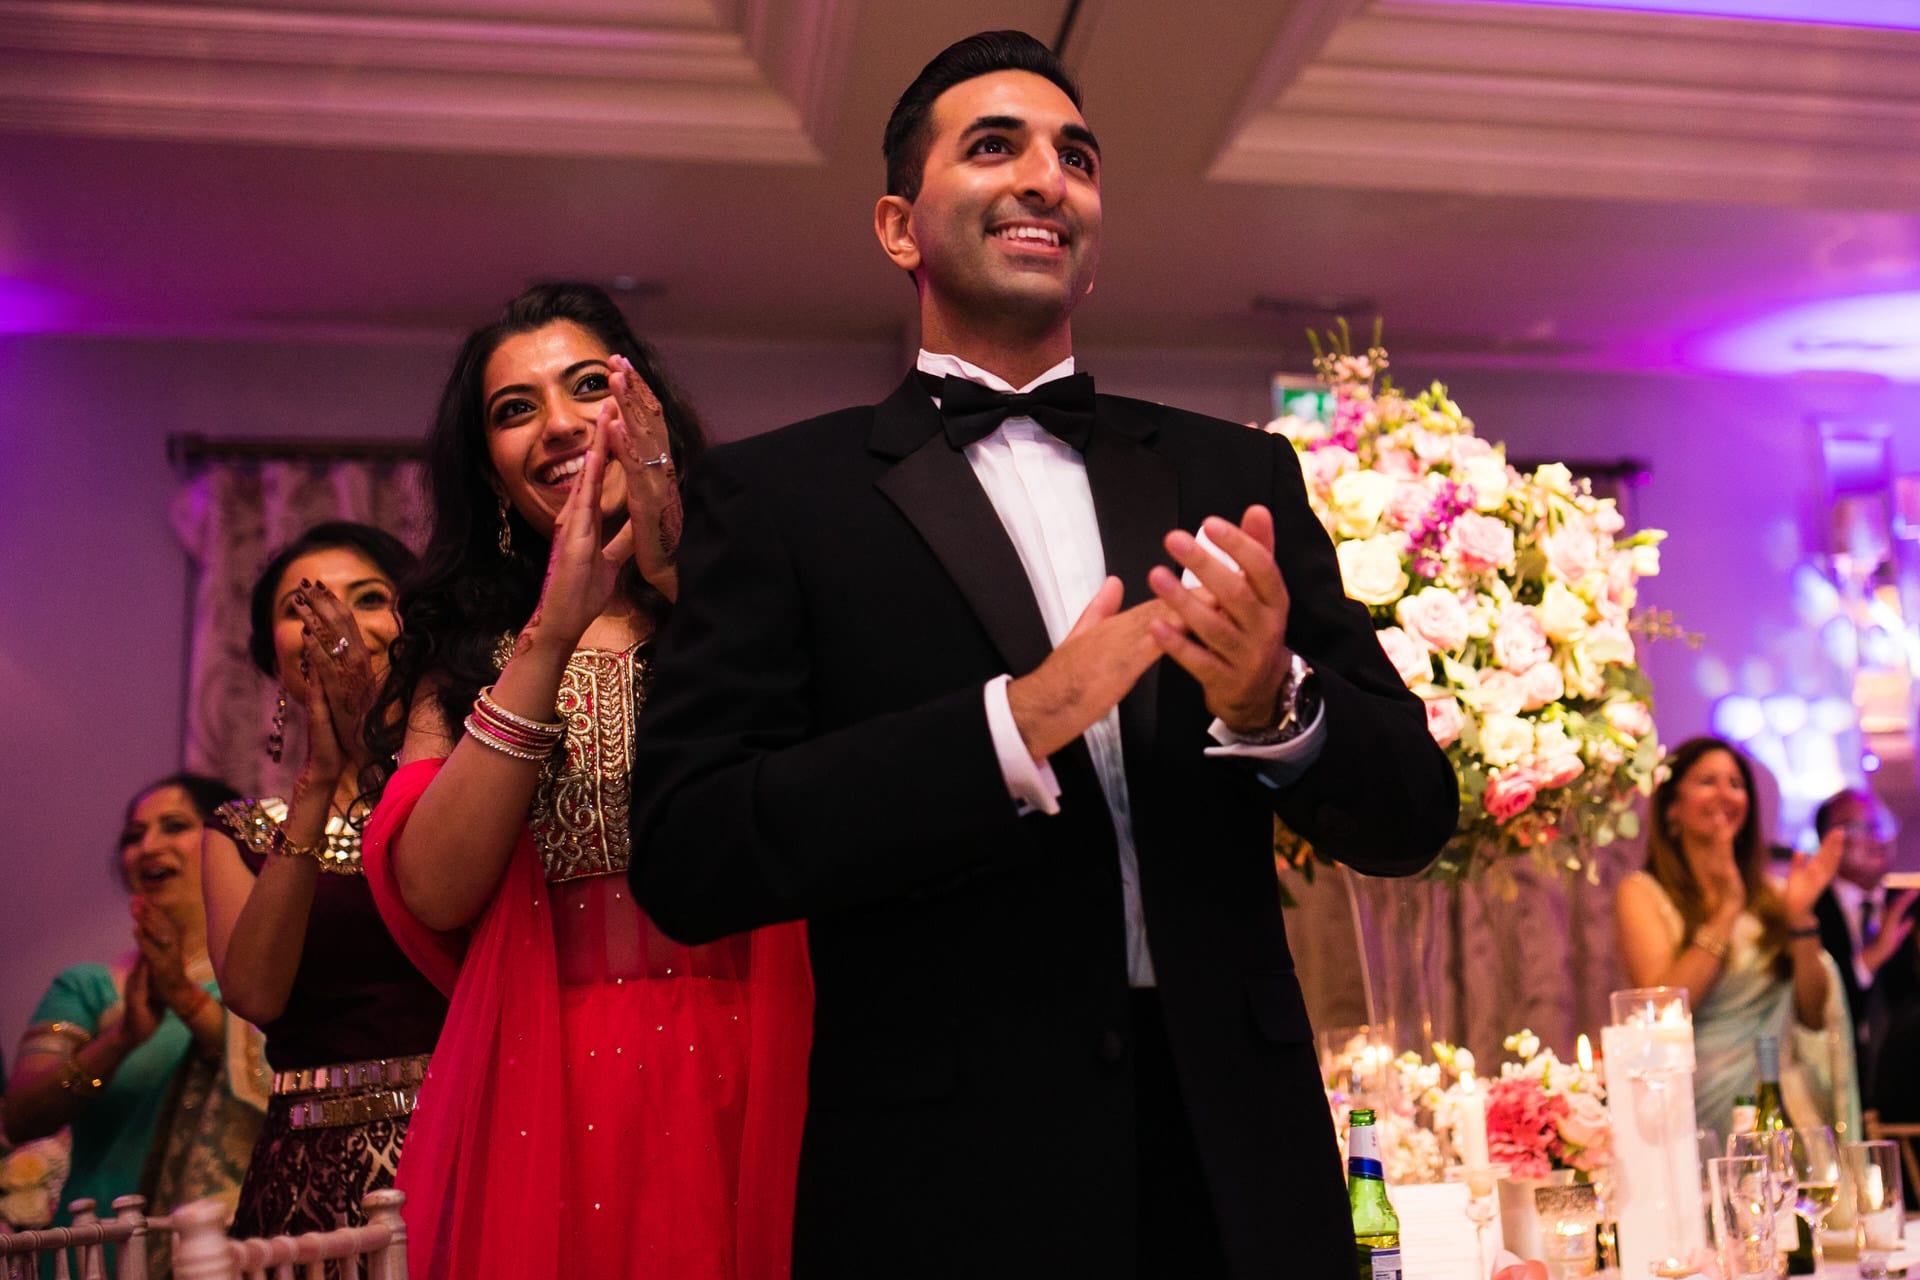 Indian wedding guests